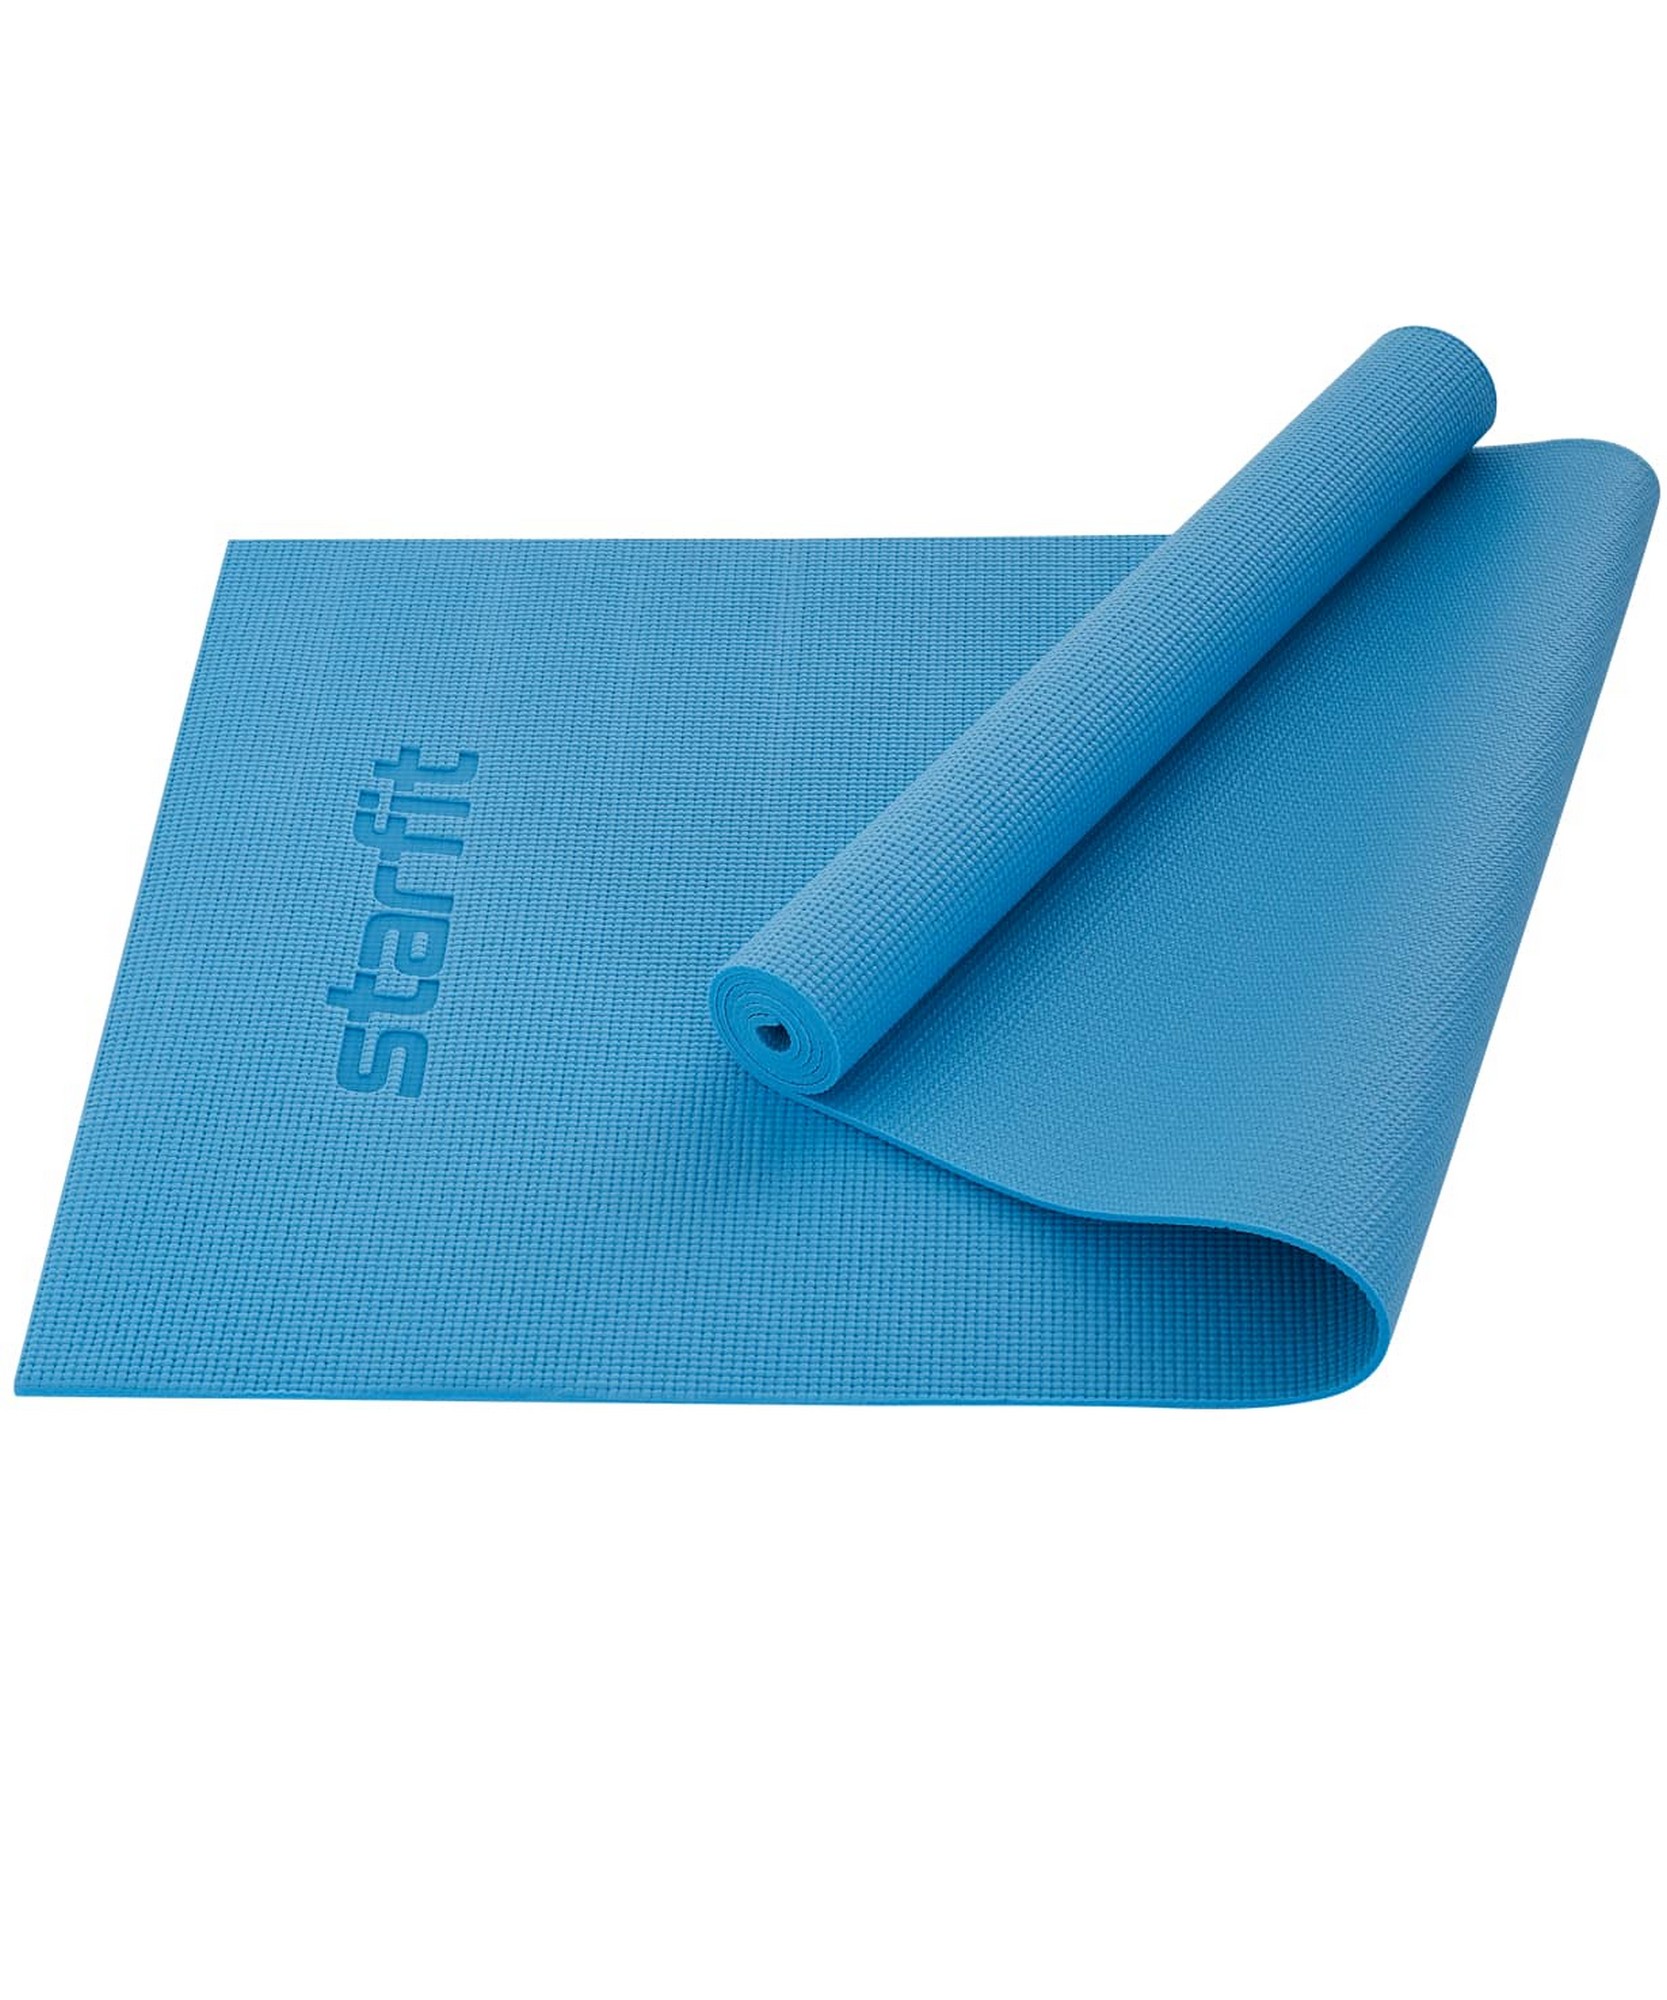 Коврик для йоги и фитнеса 173x61x0,5см Star Fit PVC FM-101 синий пастель